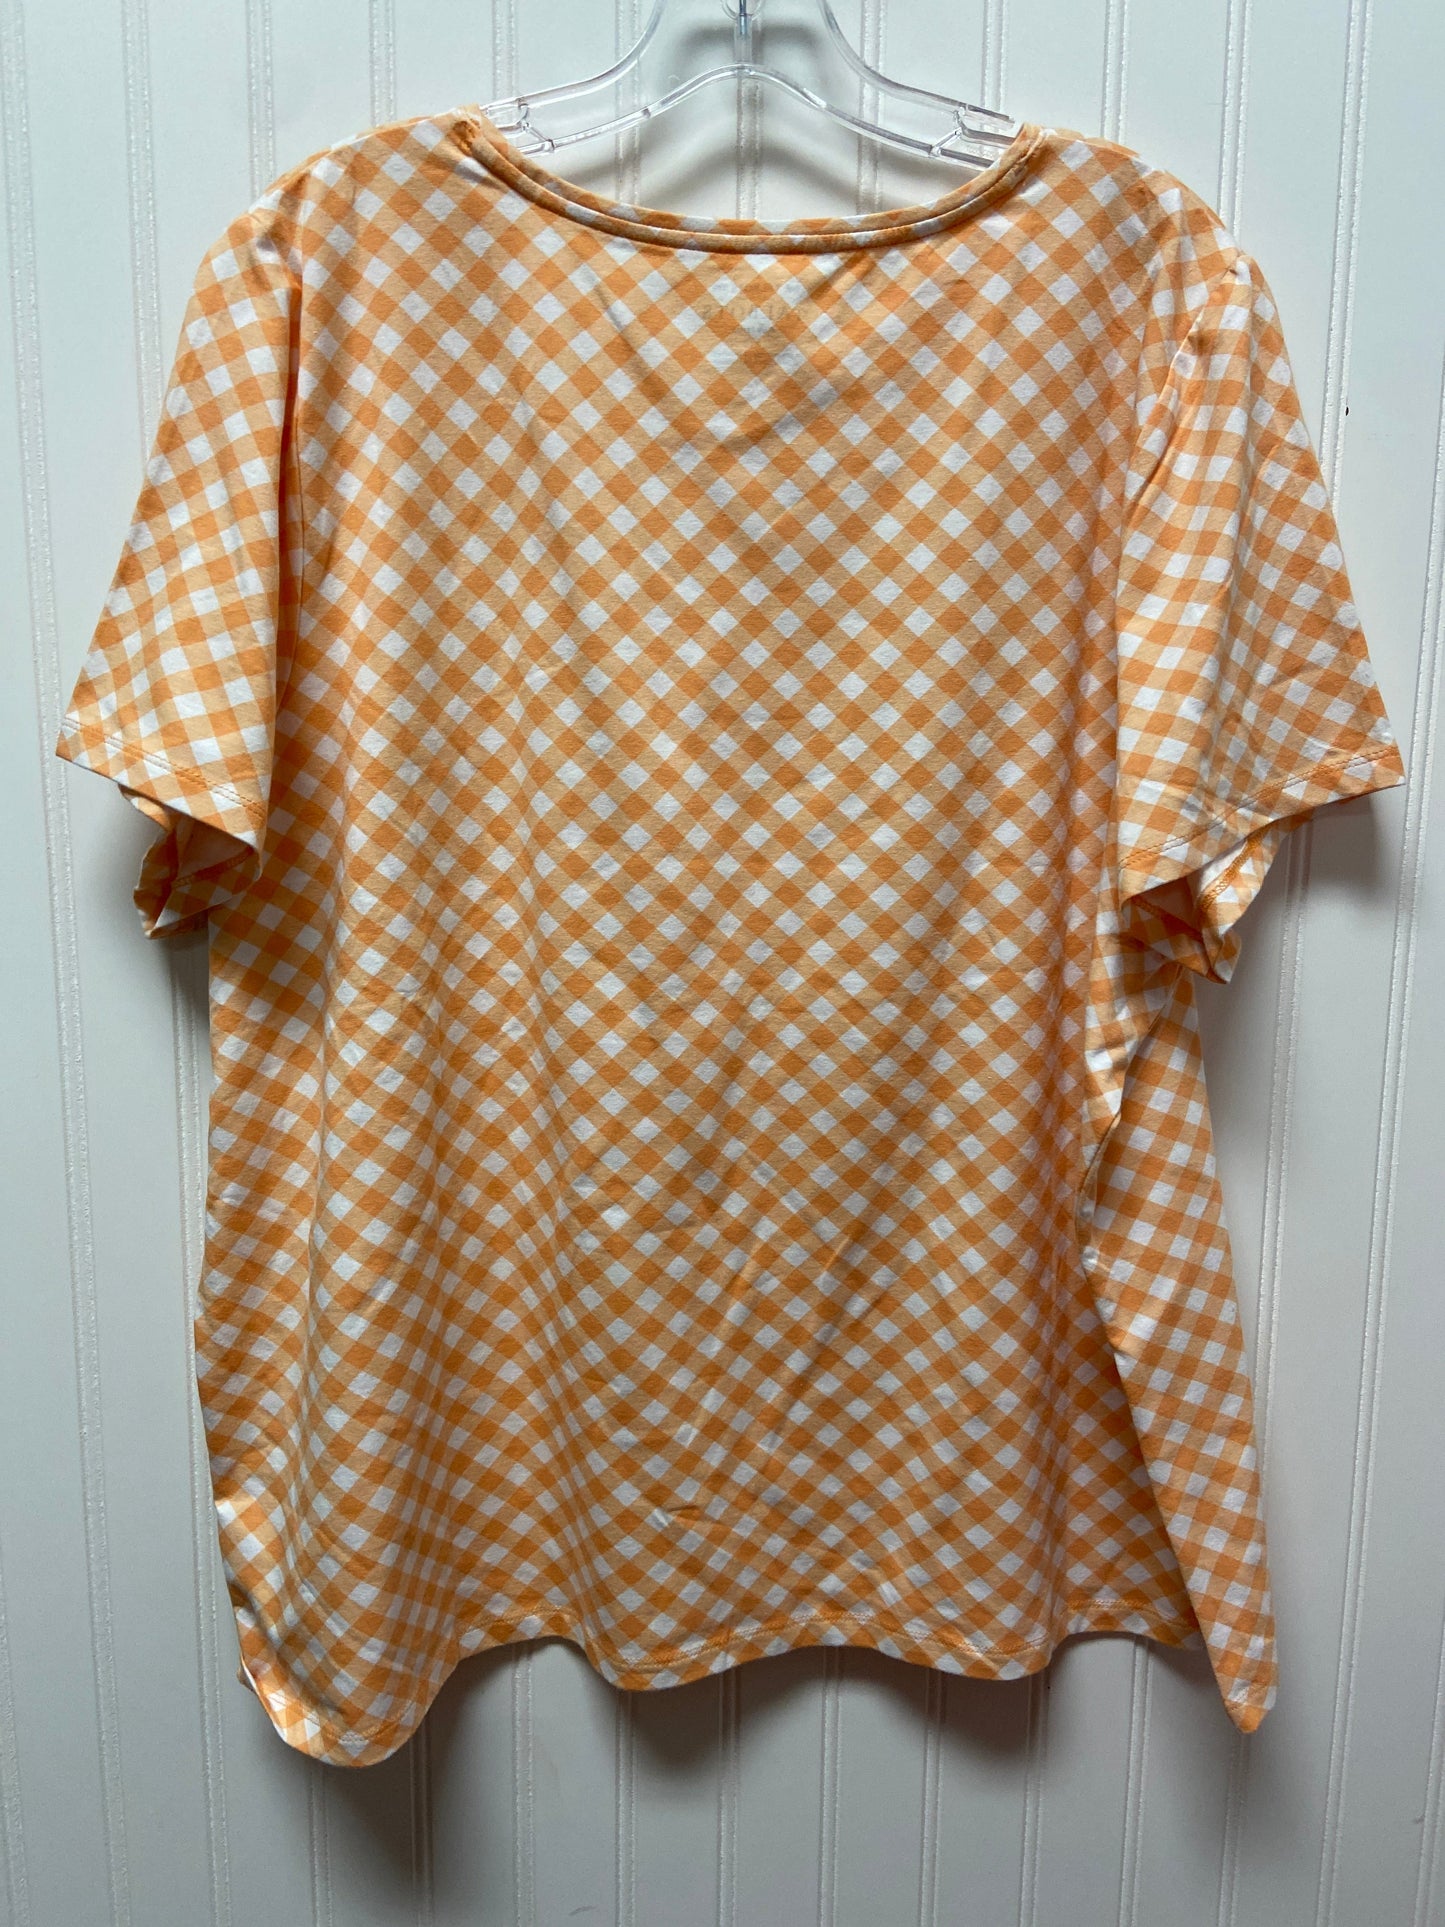 Orange & White Top Short Sleeve Talbots, Size 3x